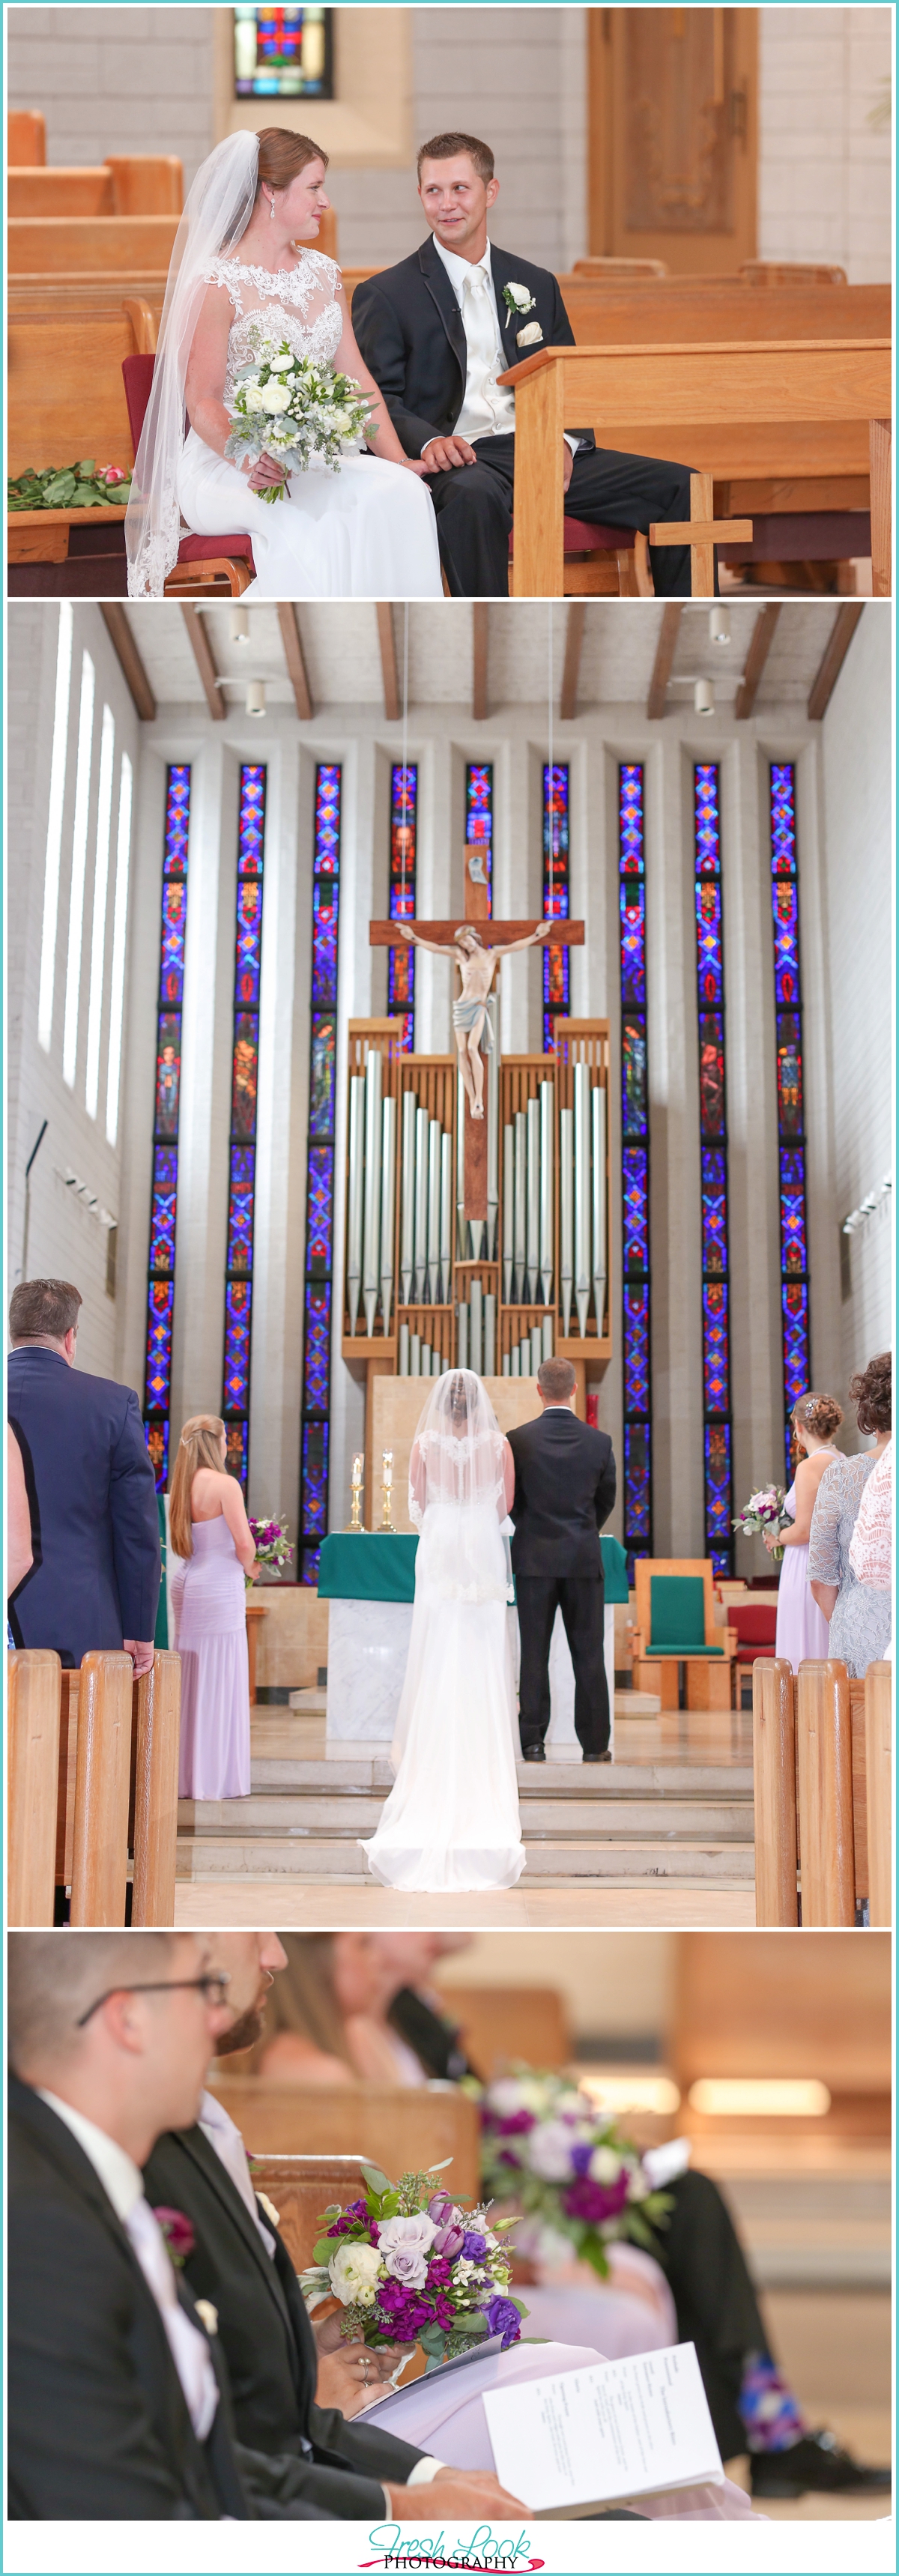 Catholic church wedding ceremony